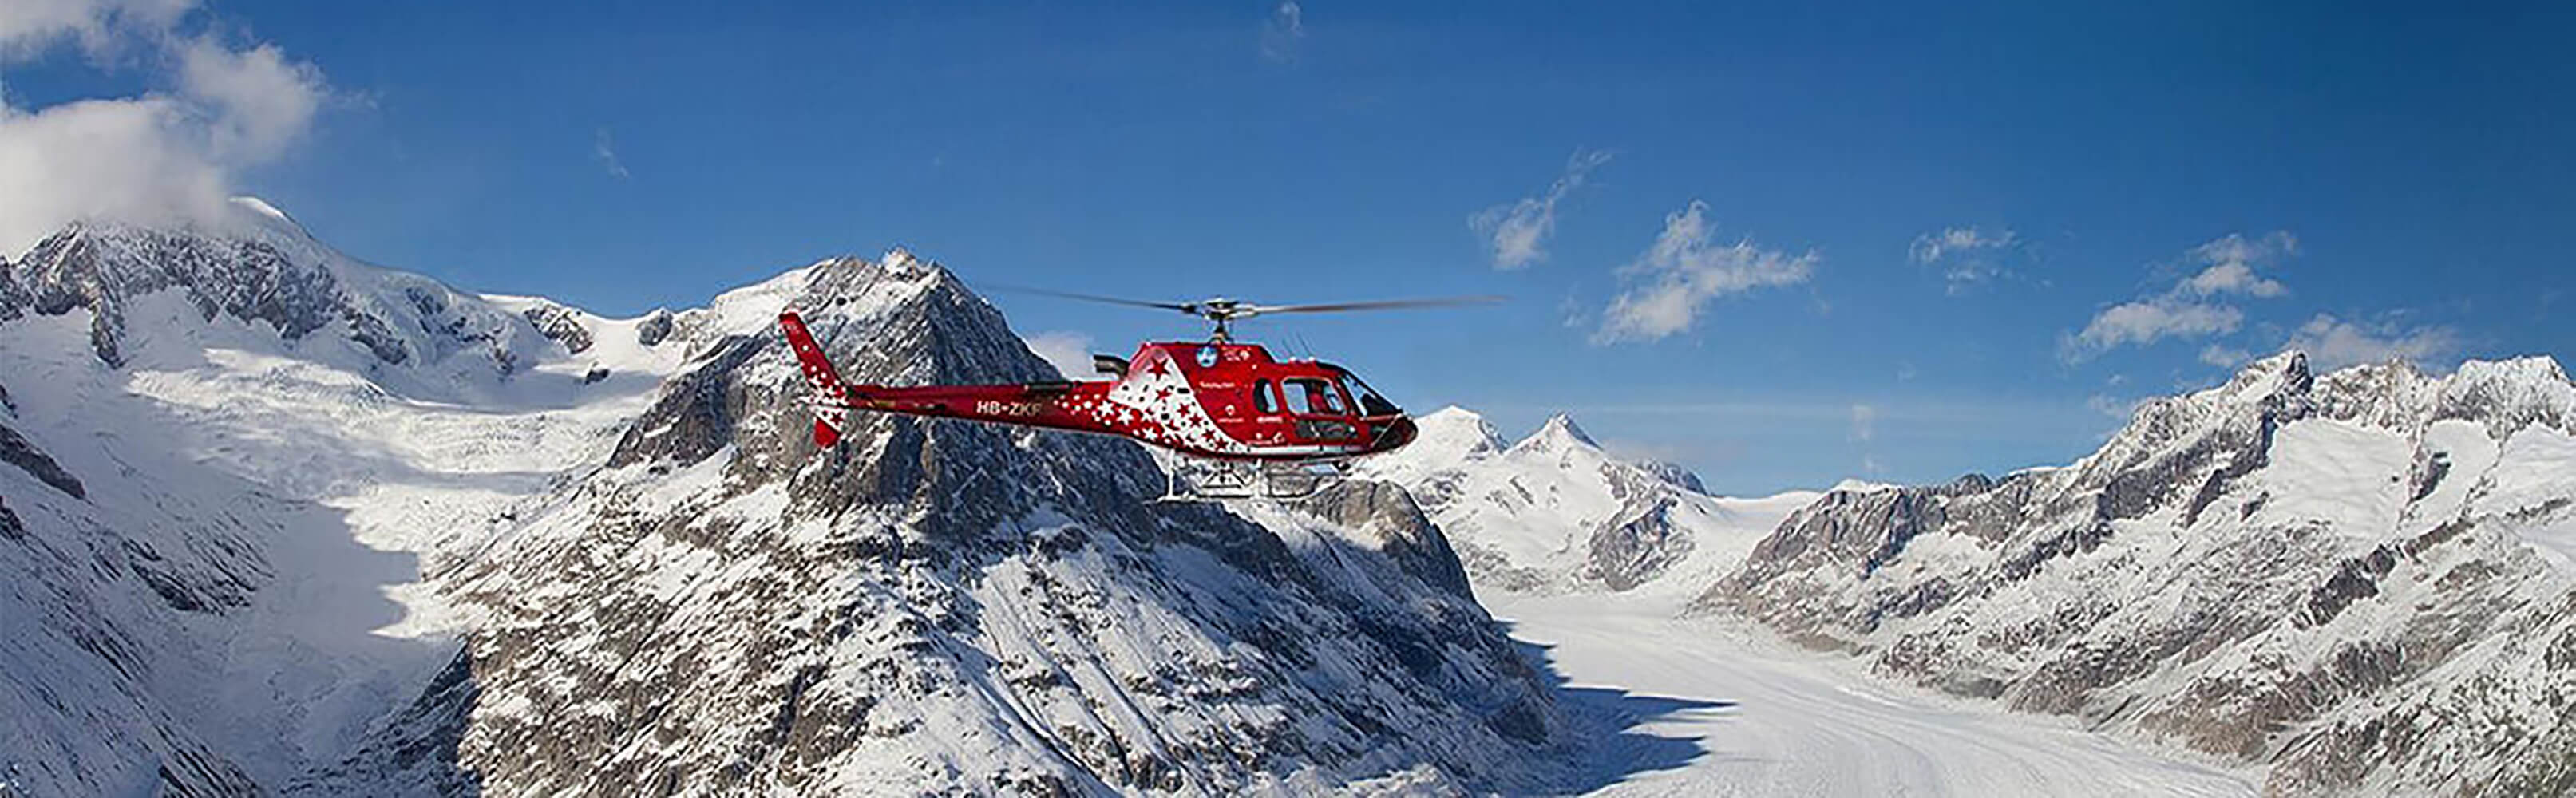 Helikopterflüge mit Air Zermatt 1